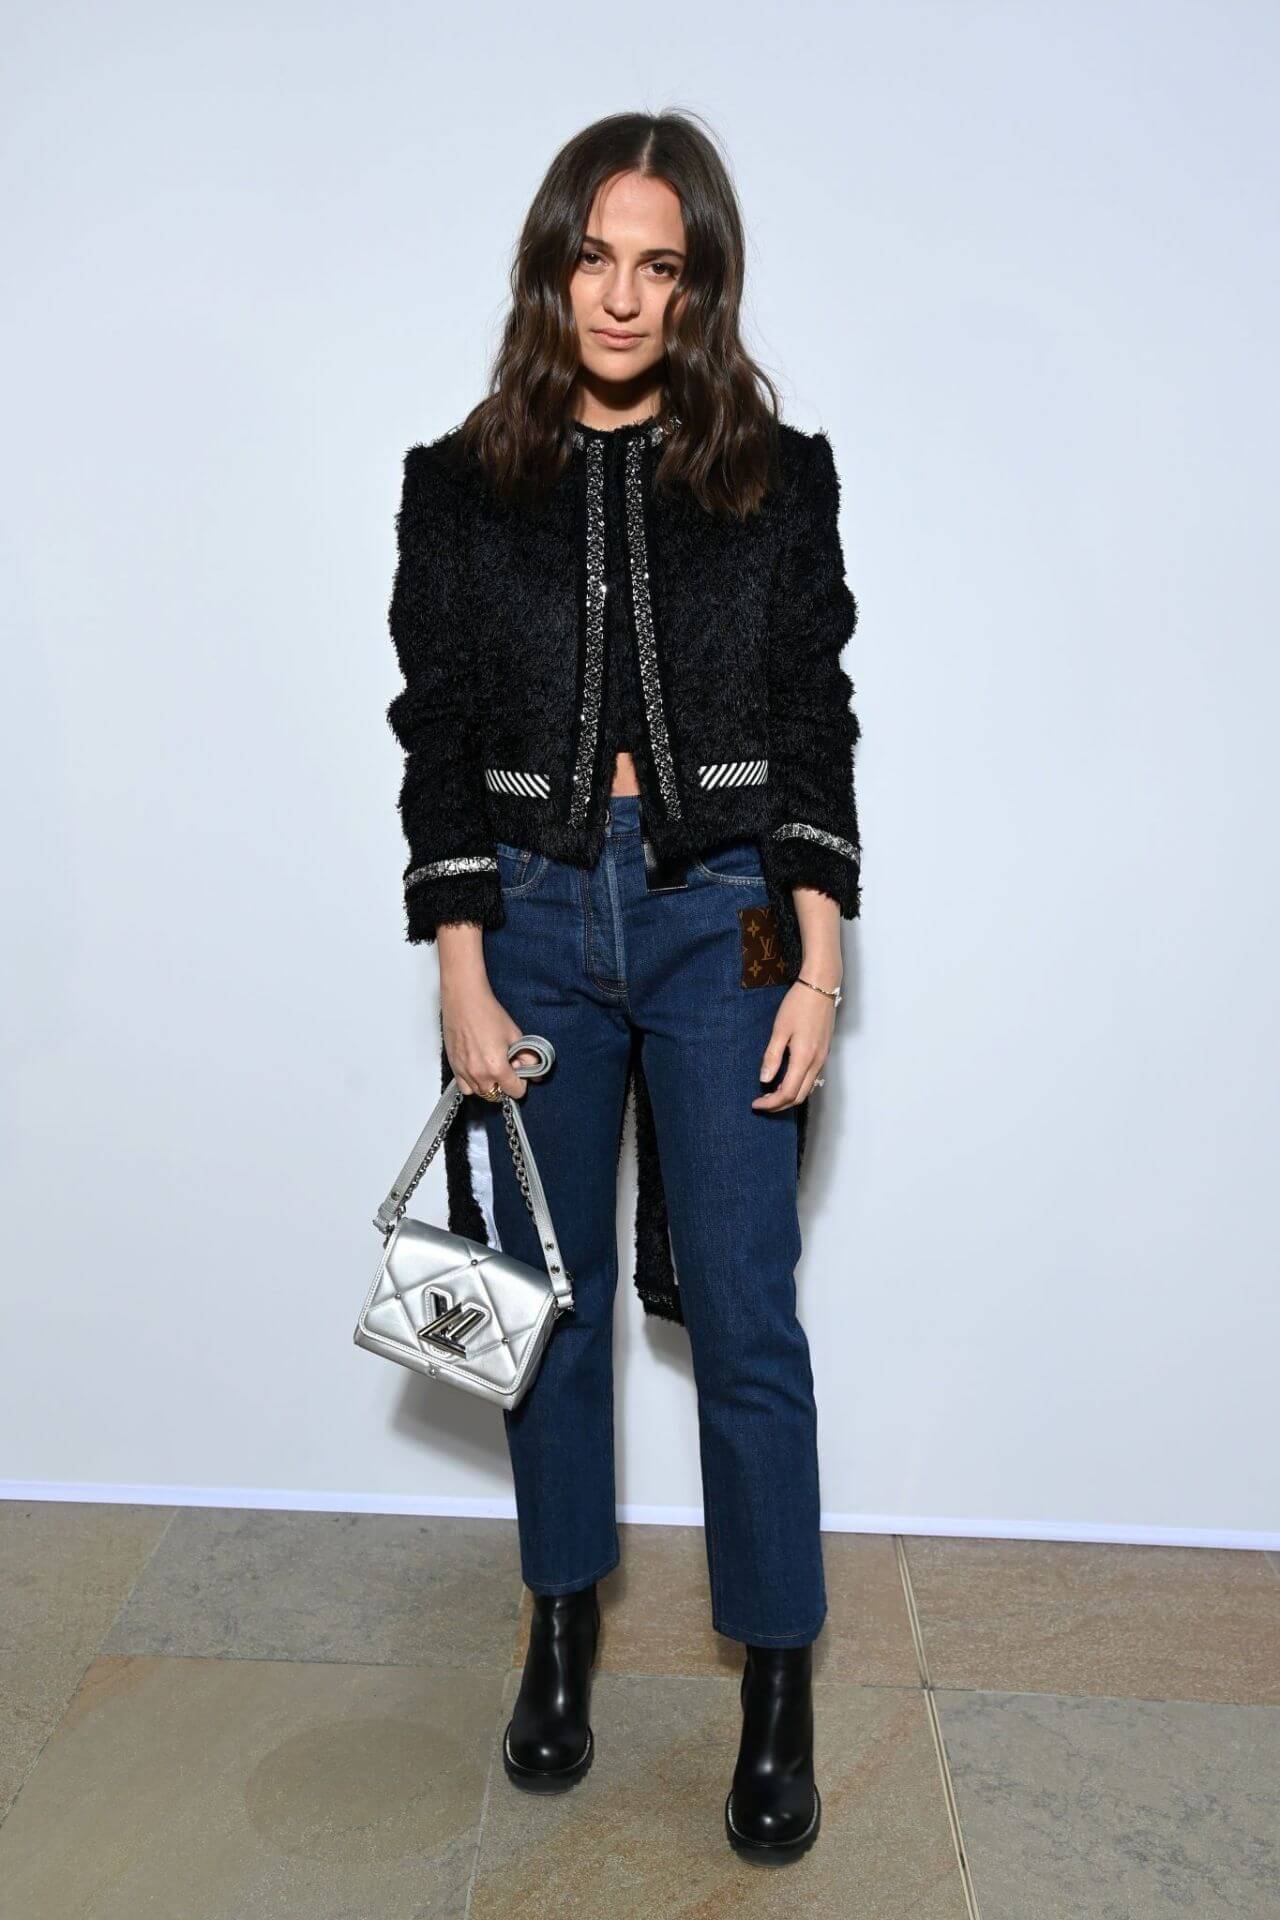 Alicia Vikander In Black Fur Coat & Blue Denim Jeans With Silver Handbag